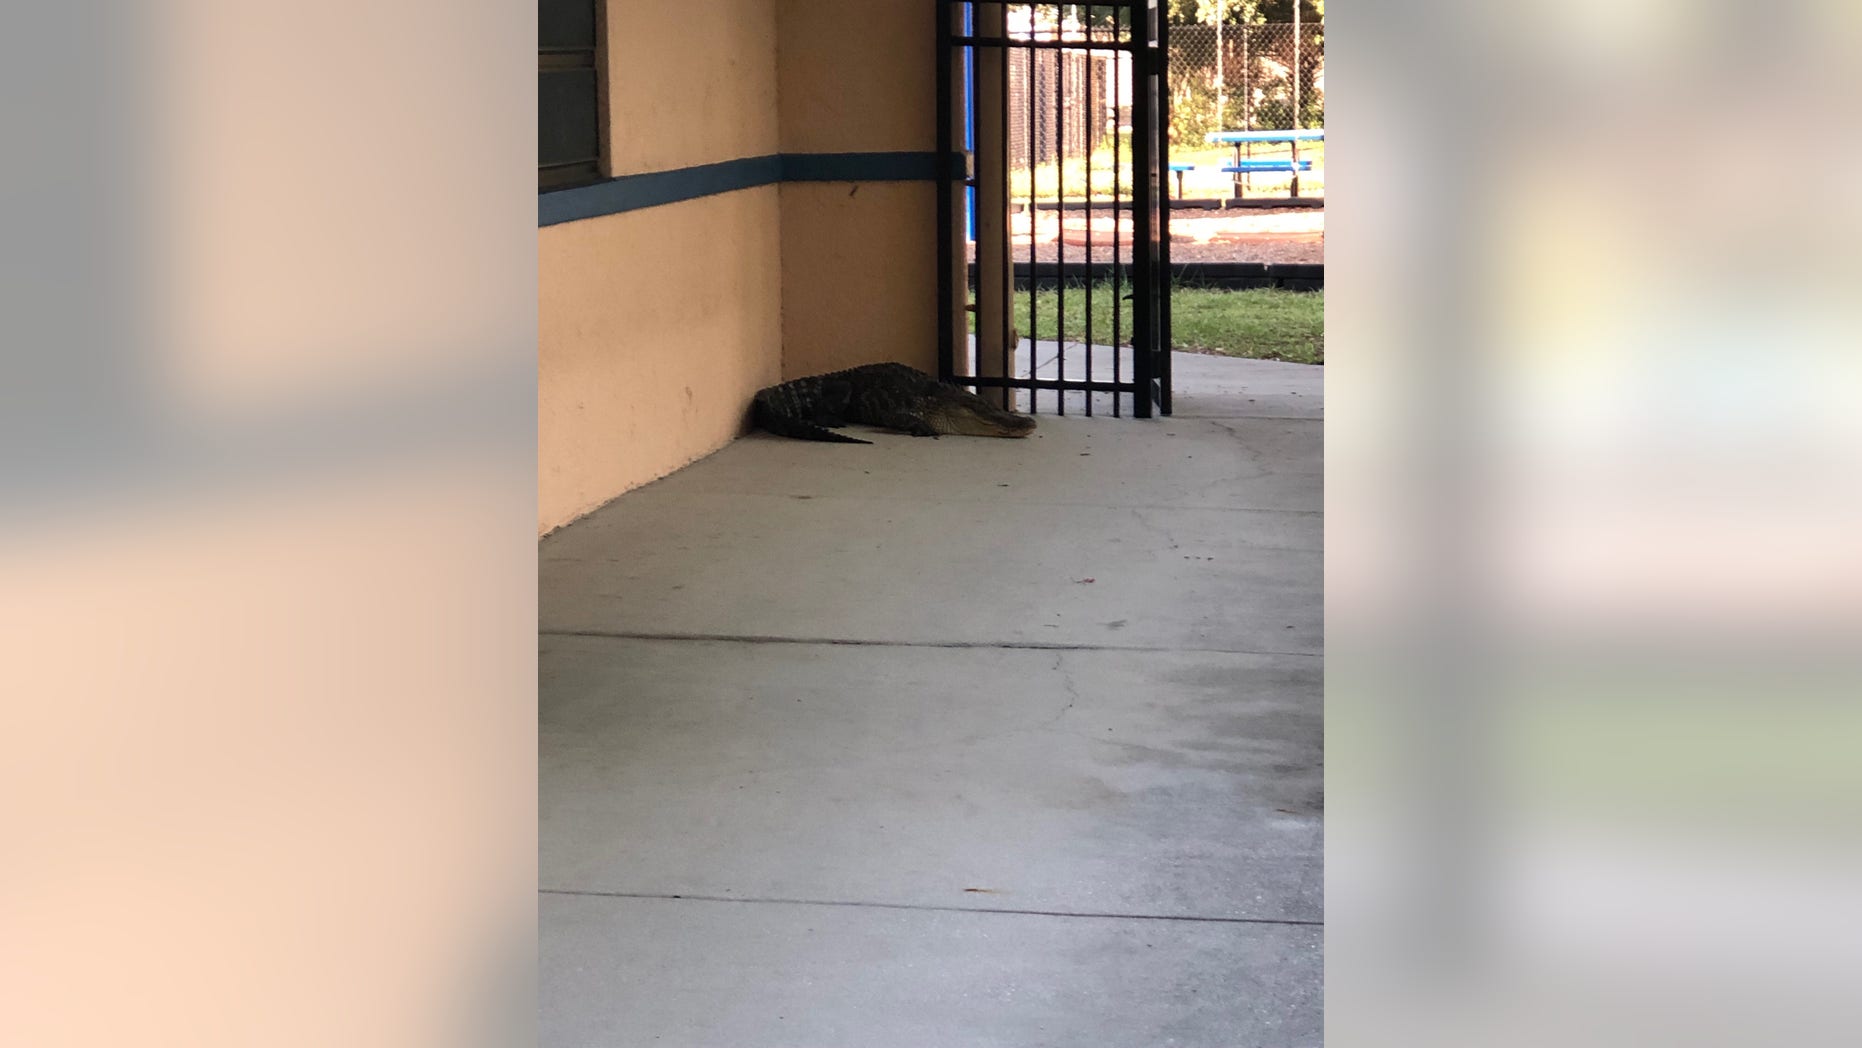 8-foot alligator visits Florida elementary school just before summer break – Florida Weirdness